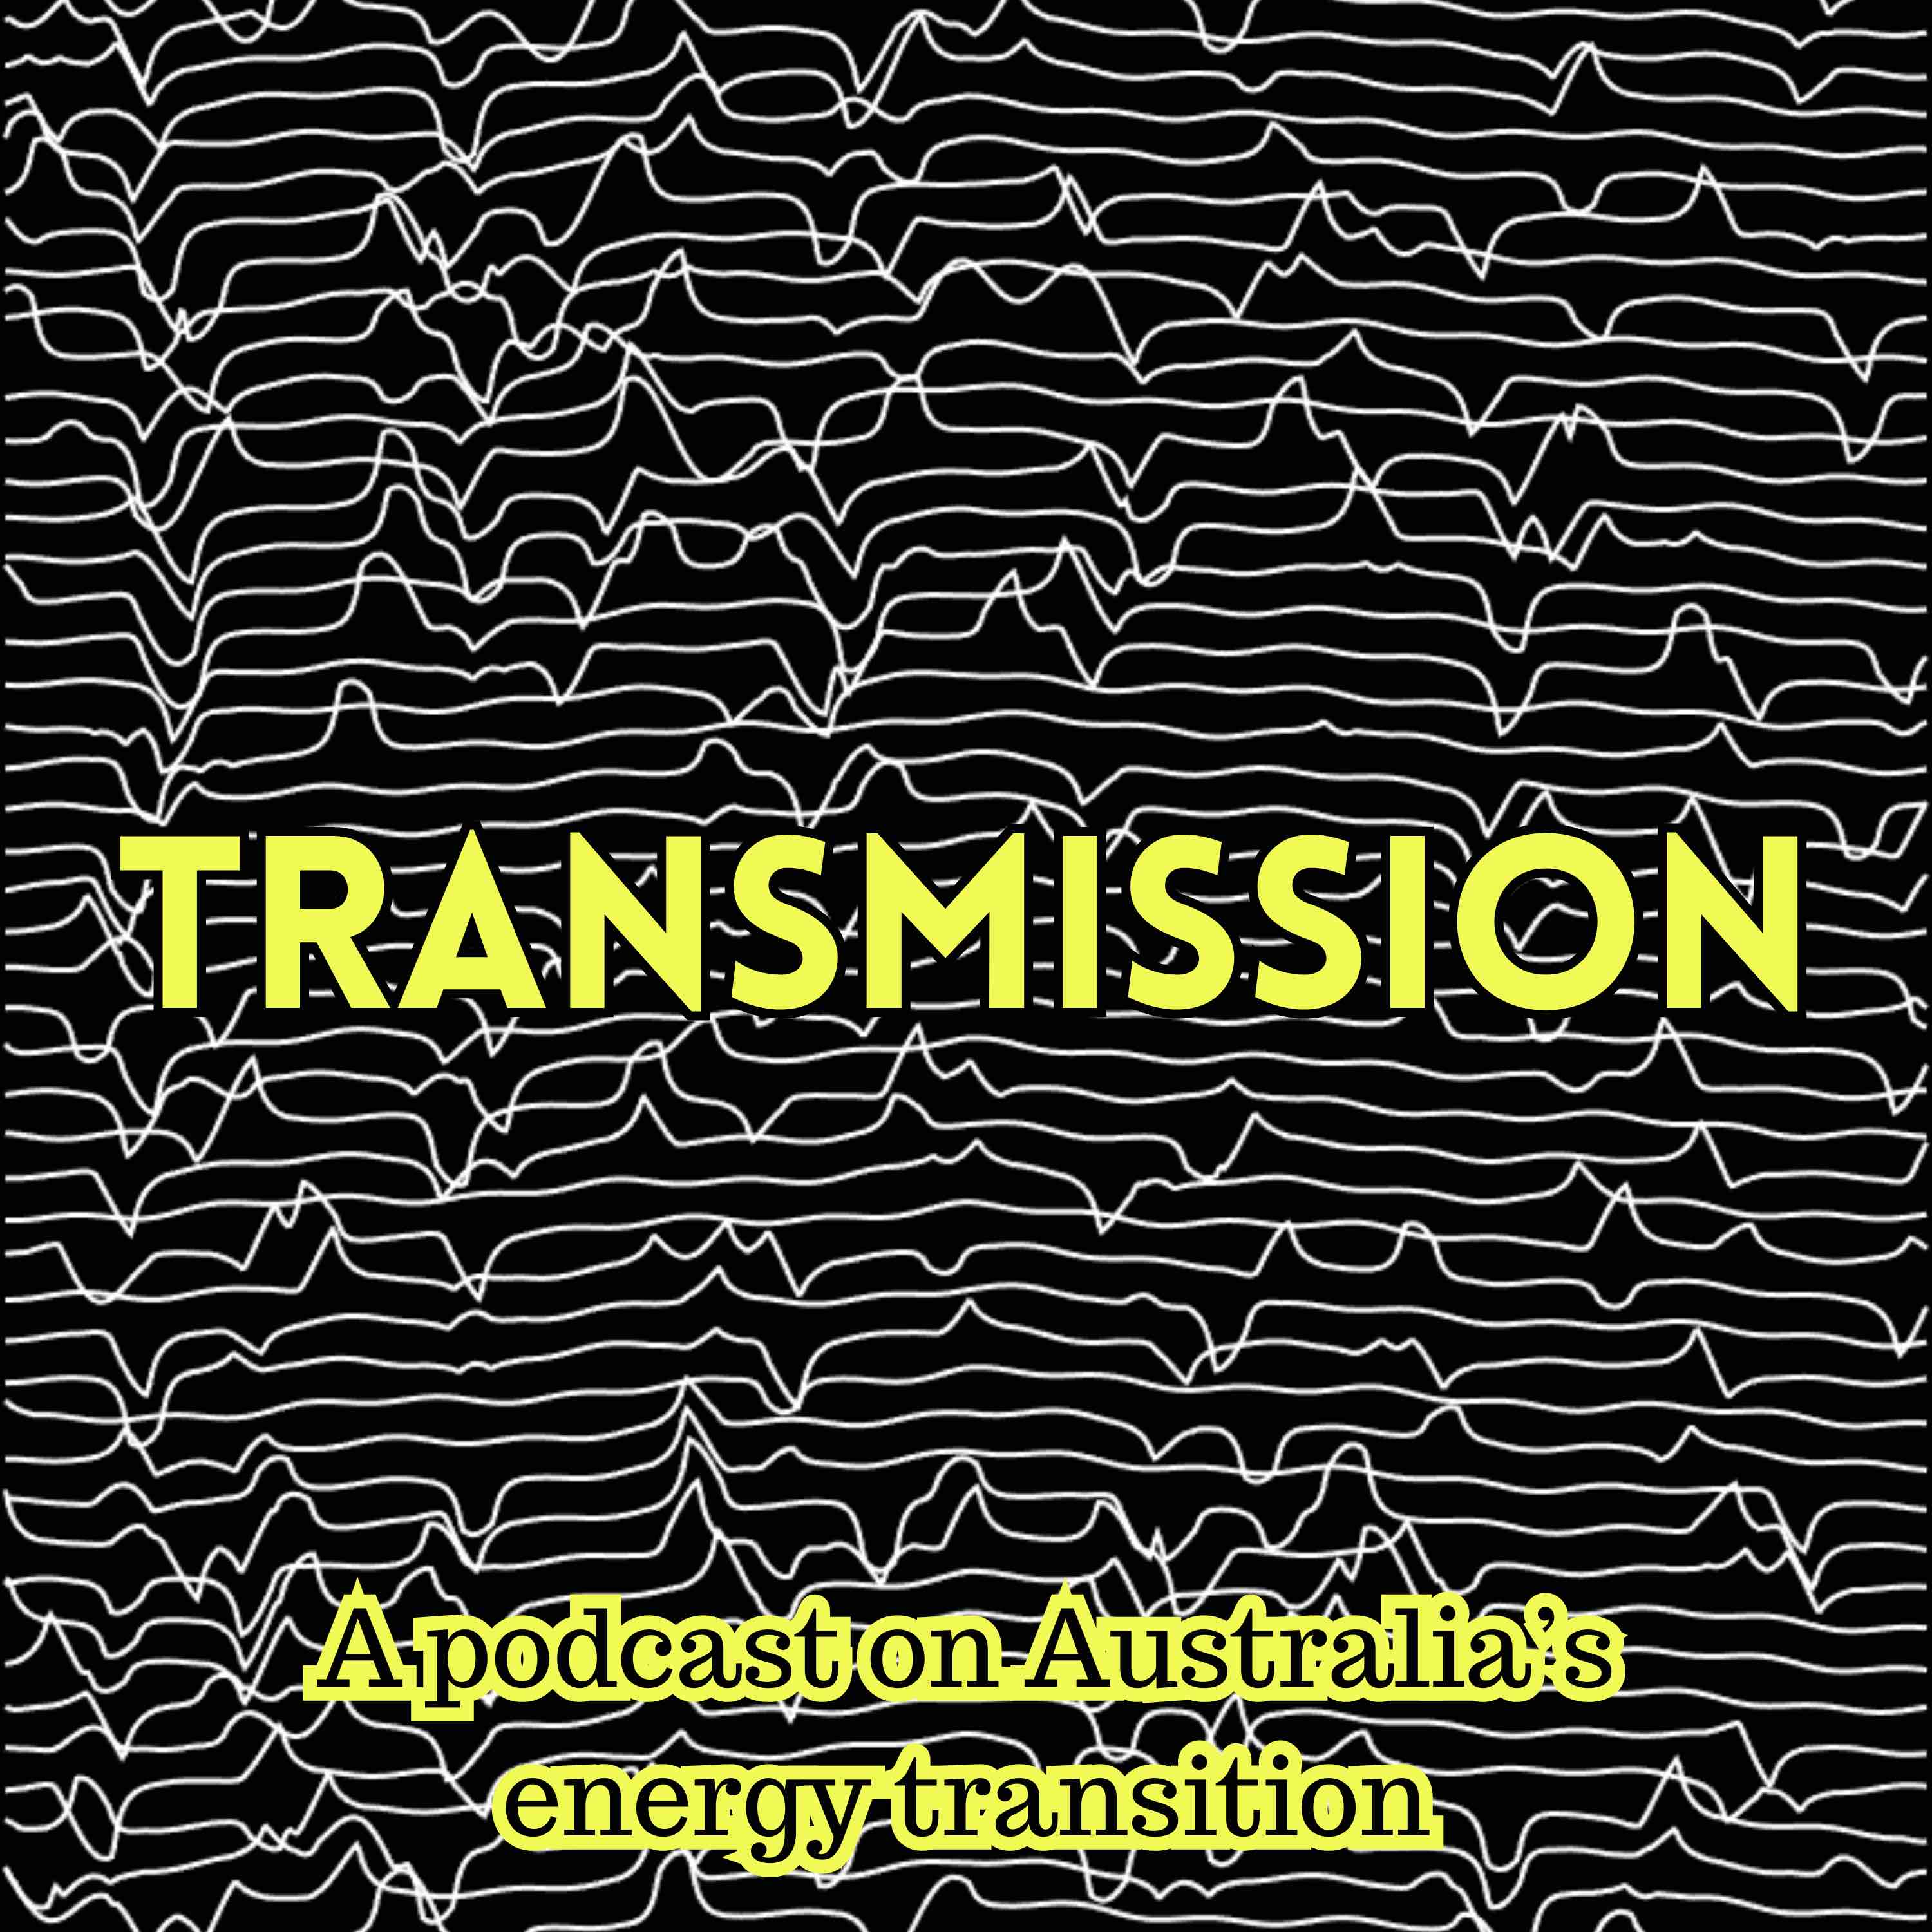 Transmission's artwork